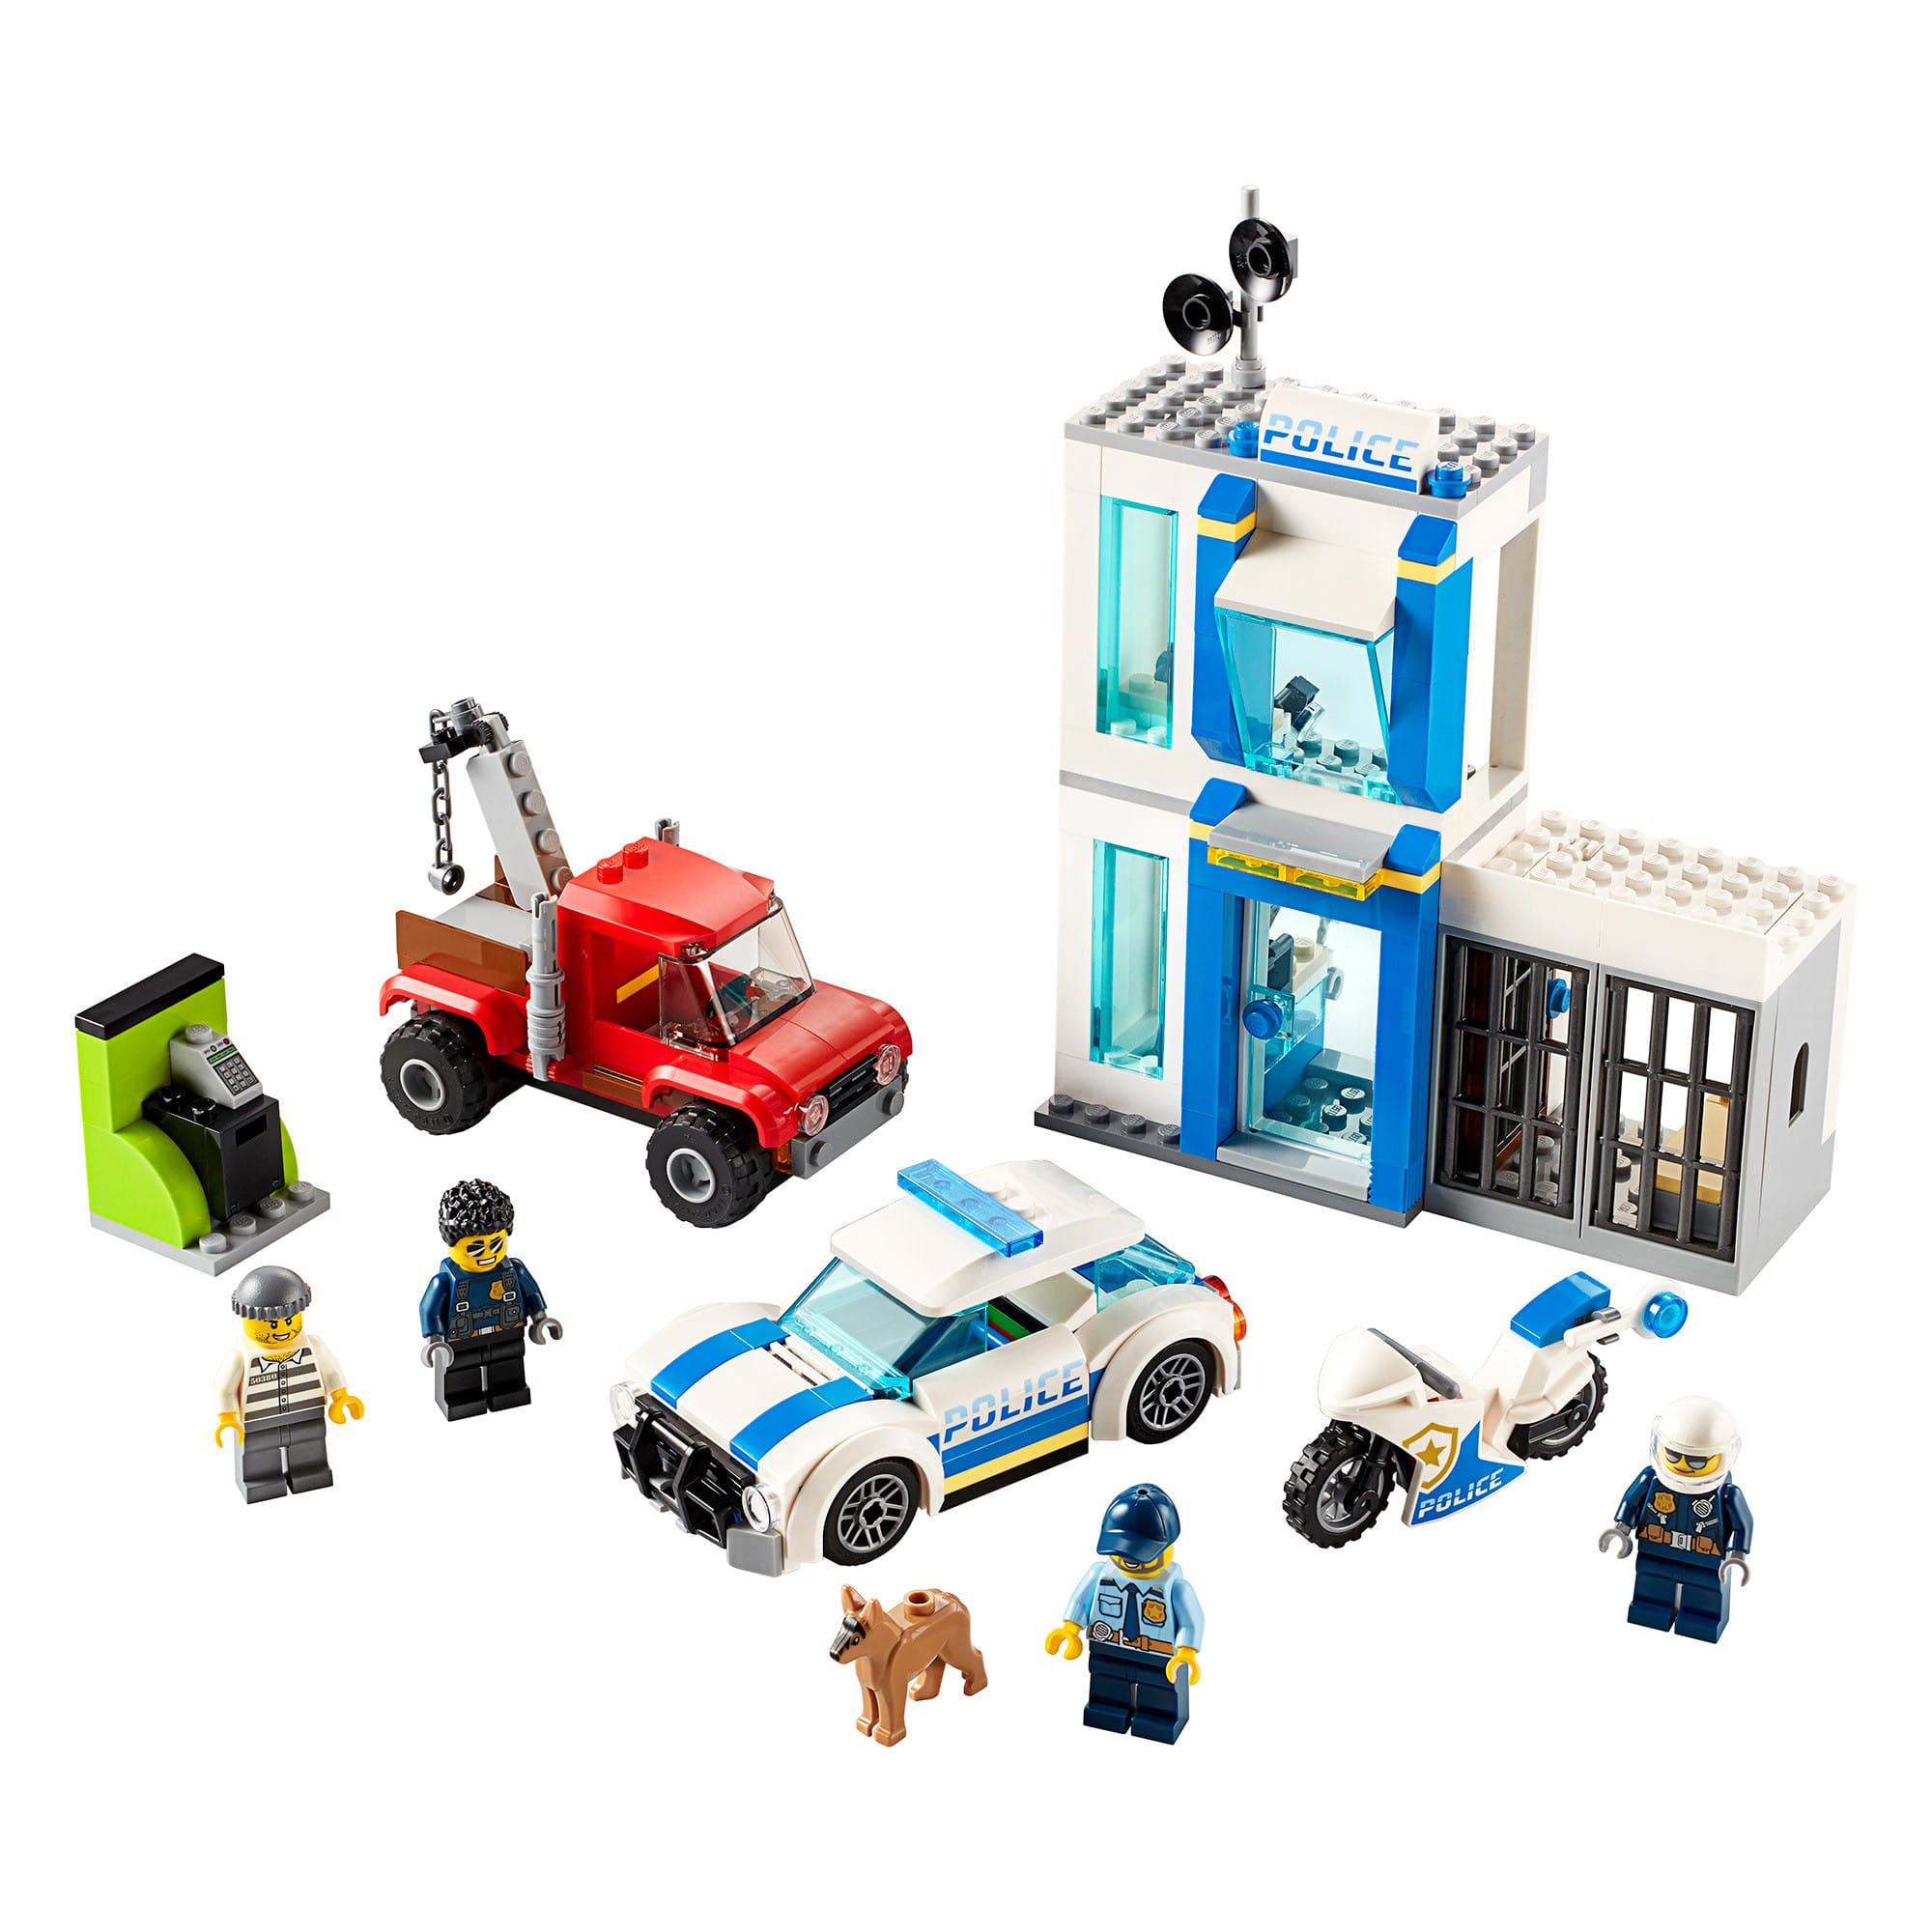 LEGO City - Police - 60270 Police Brick Box